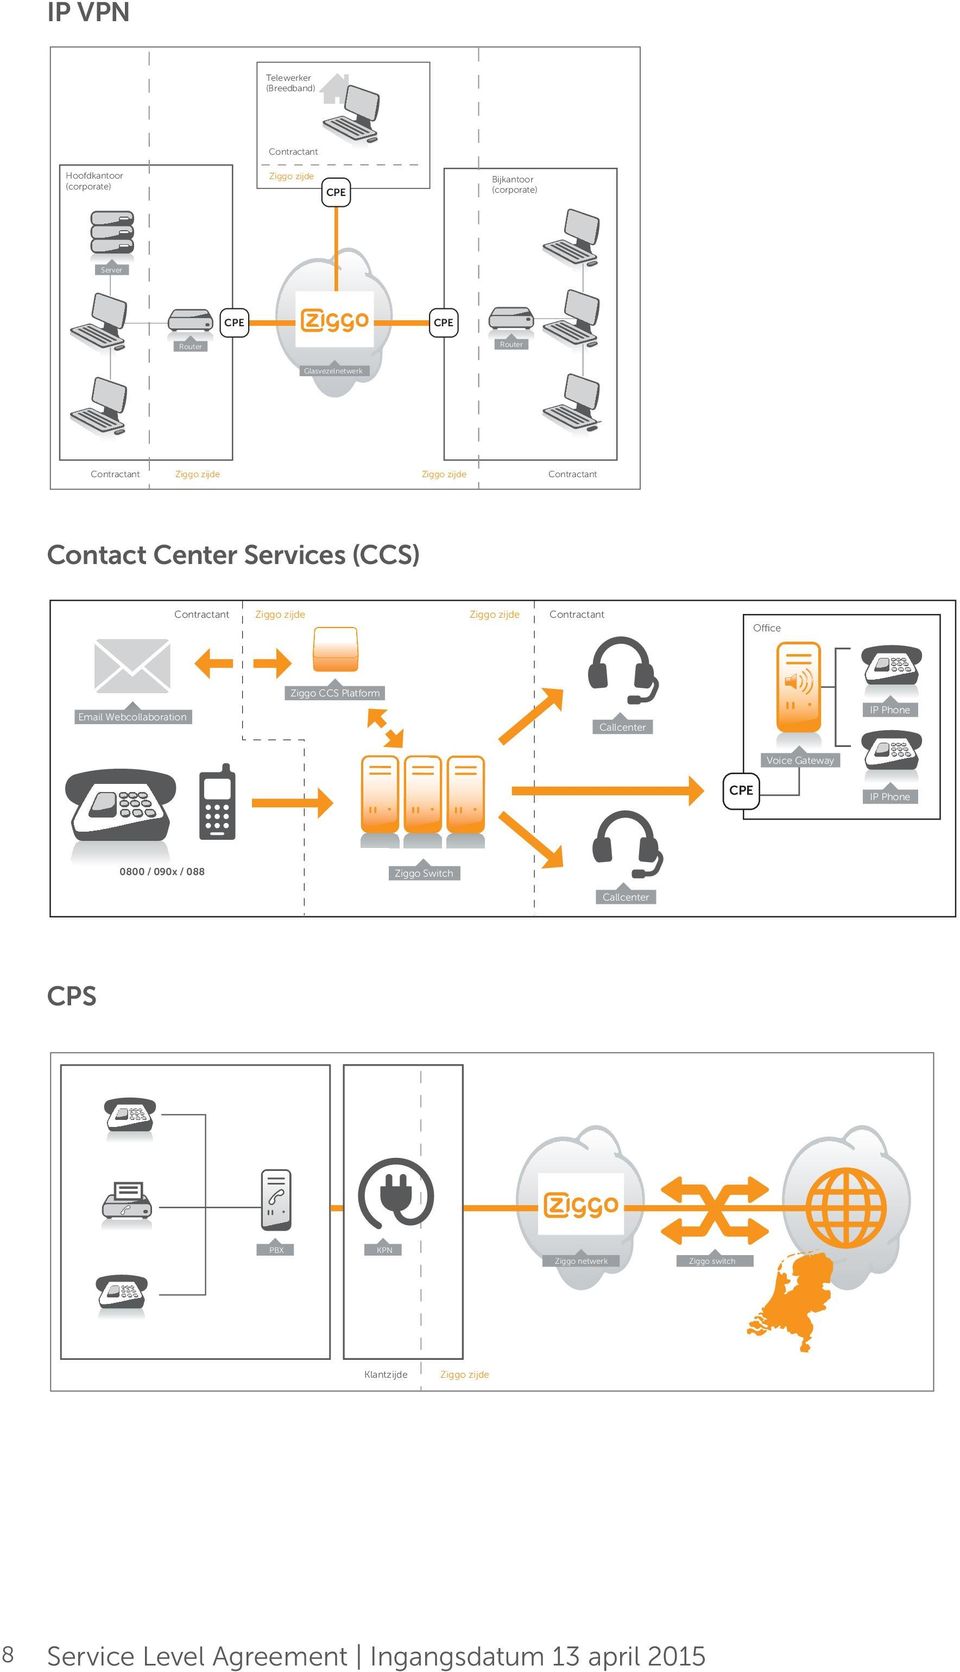 zijde Contractant Office Ziggo CCS Platform Email Webcollaboration Callcenter IP Phone Voice Gateway IP Phone 0800 / 090x / 088